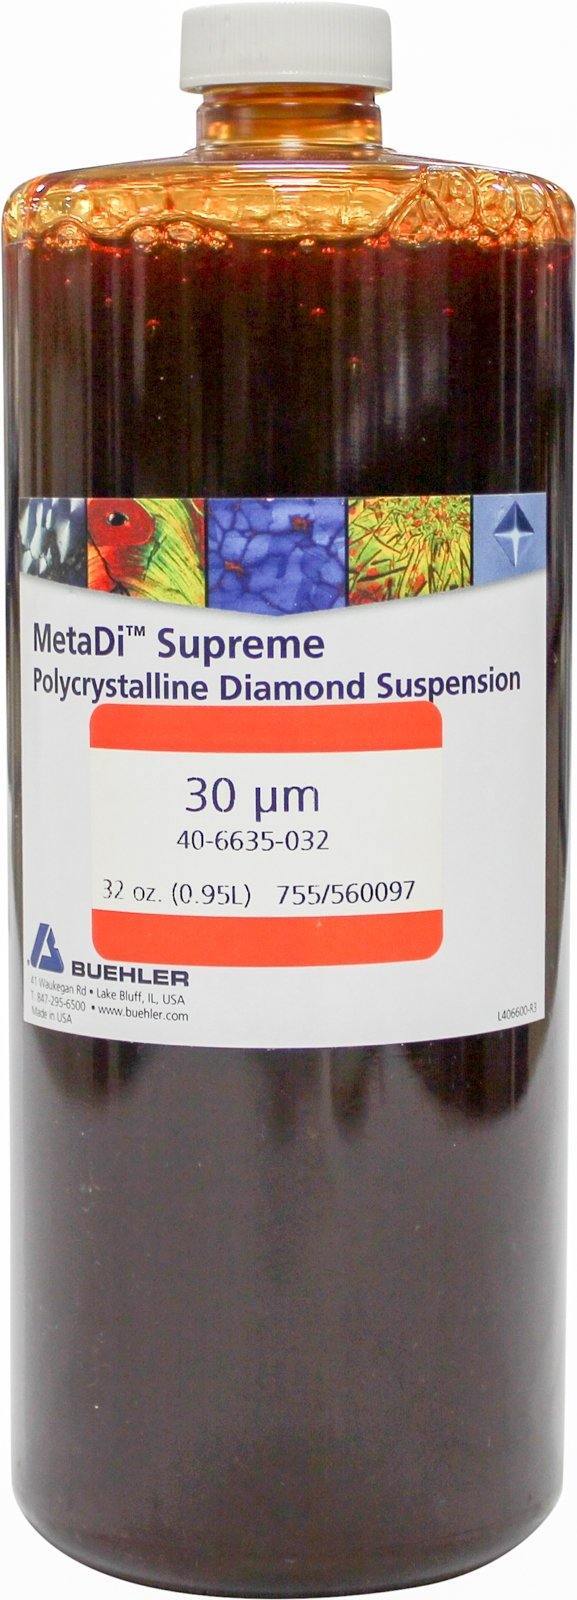 MetaDi Supreme, Poly, 30 µm 32oz-p - JH Technologies